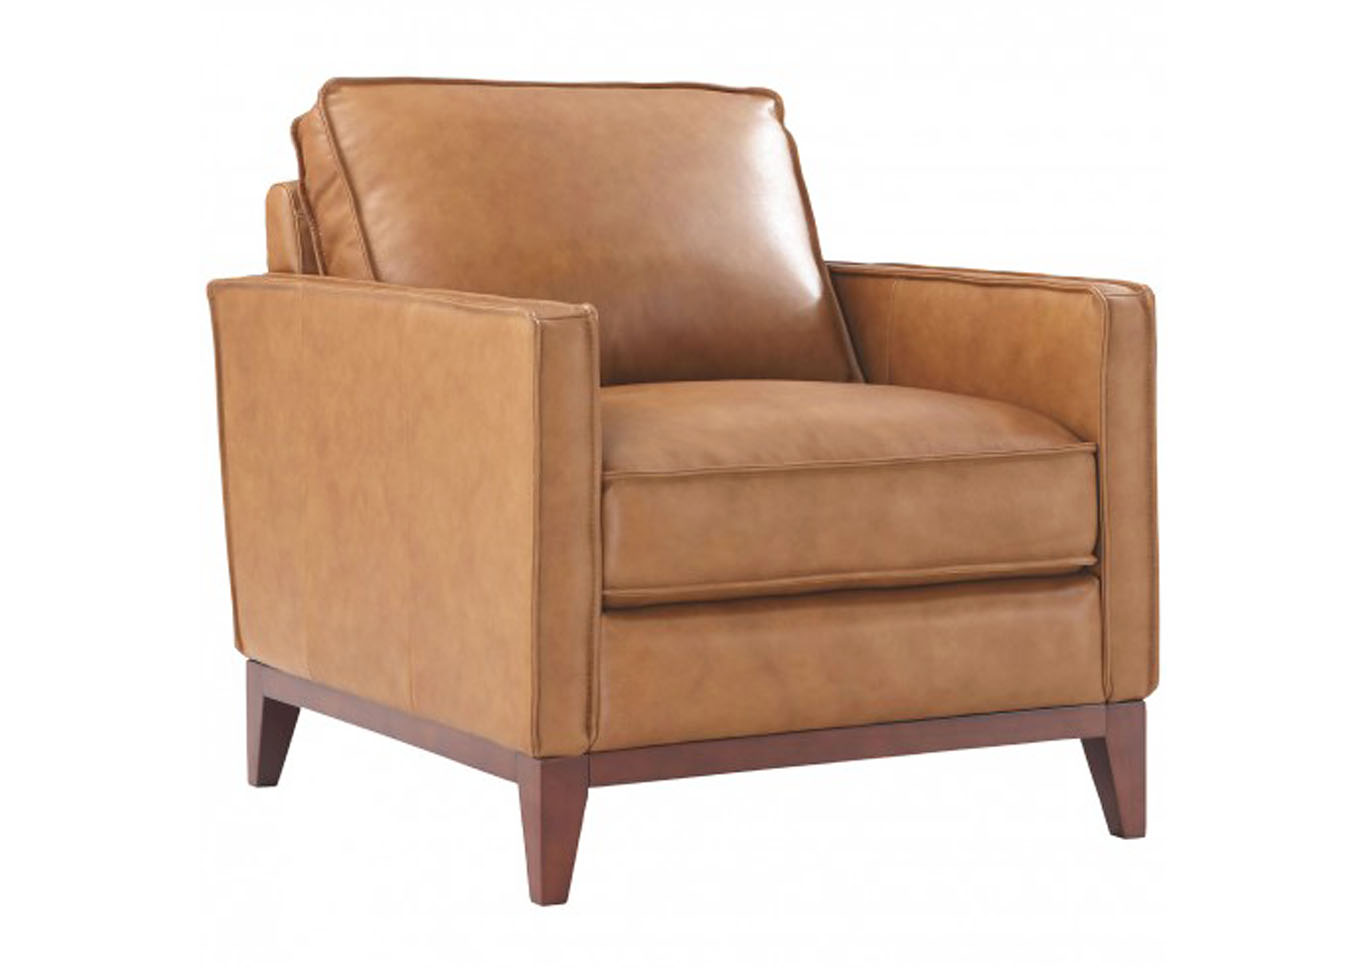 Carlsbad Leather Carmel Color sofa and chair